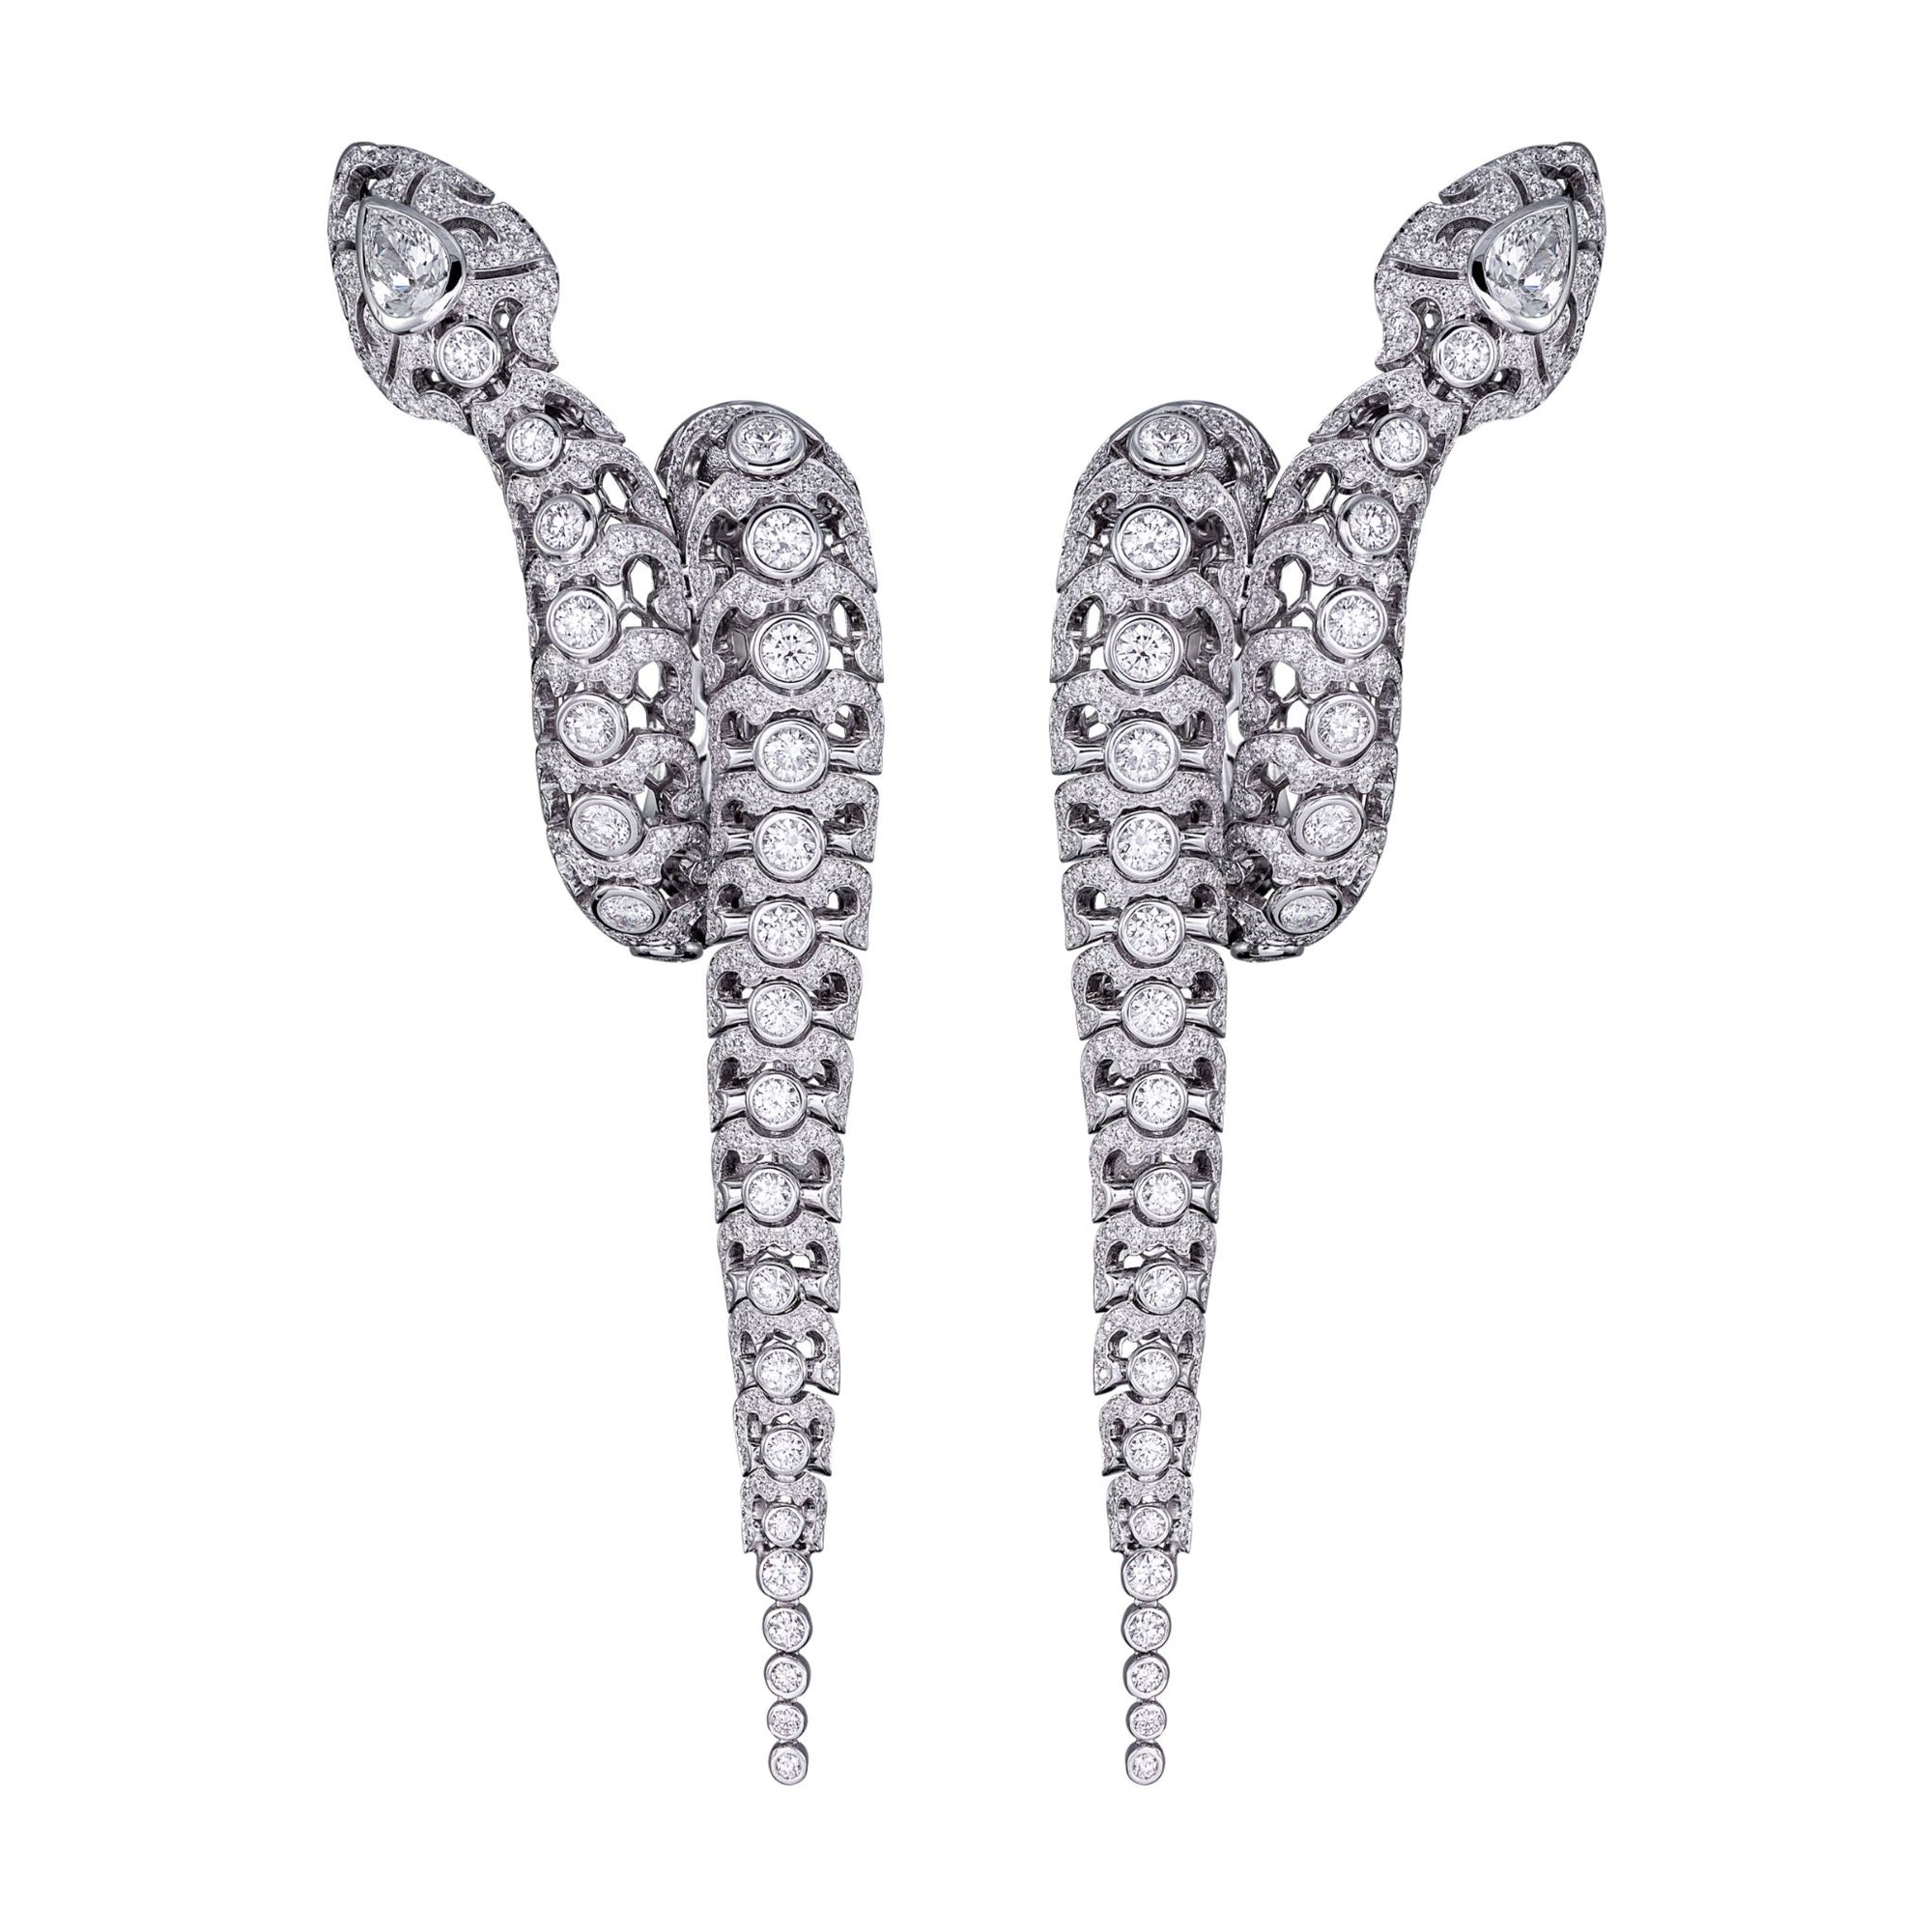 SERPENTES DIAMOND EARRINGS WHITE GOLD | Earring | 18K white gold, diamonds, earring, serpentes, snake | ORLOV